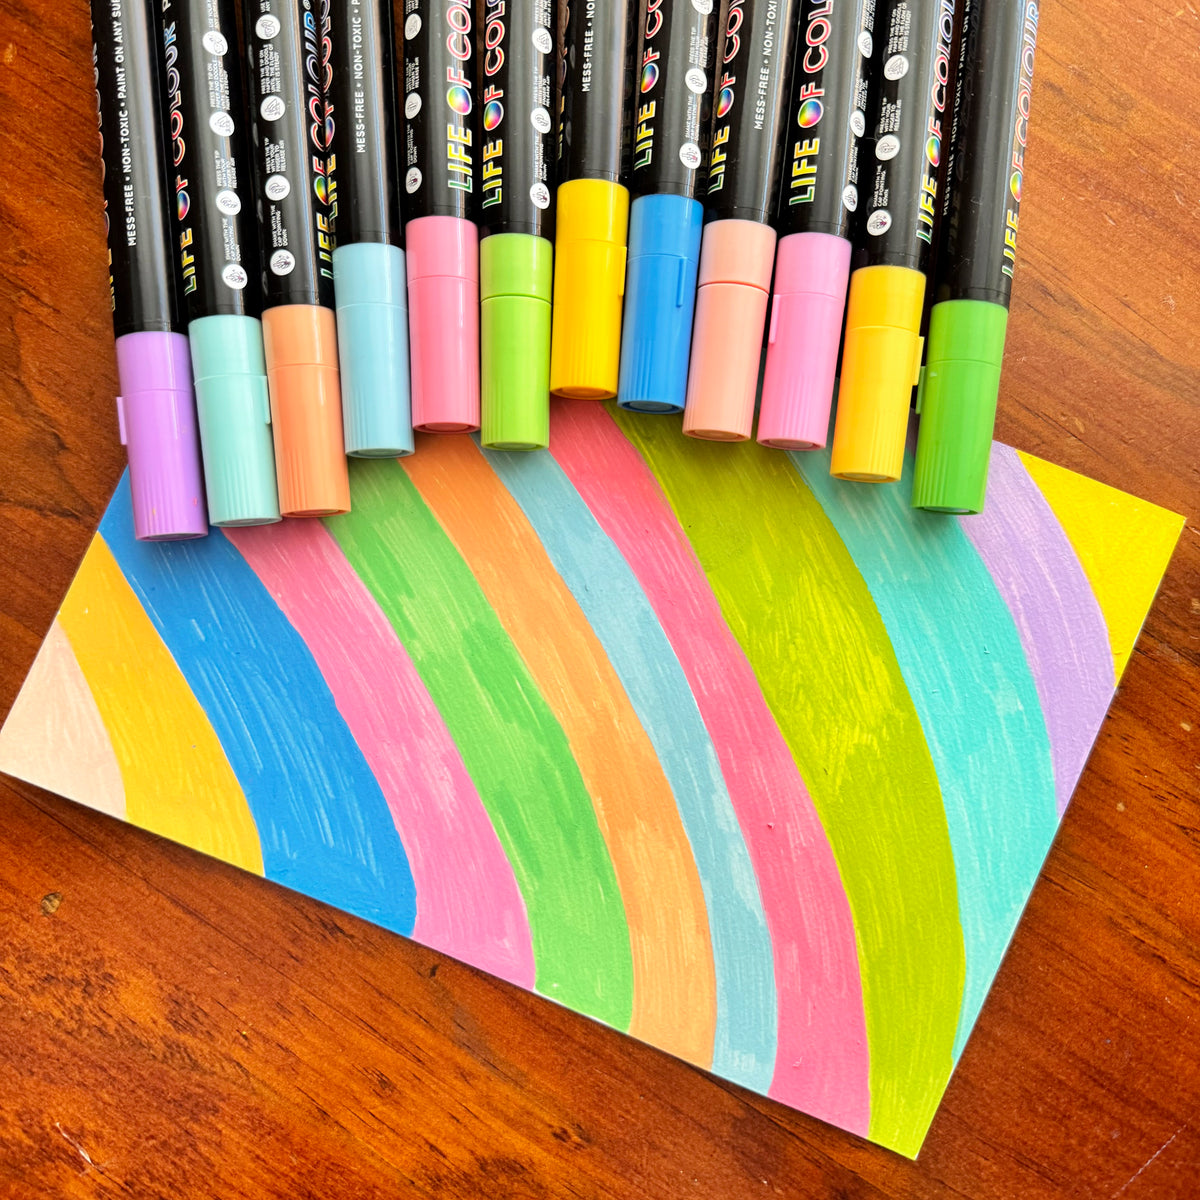 Pastel Dreams 3mm Medium Tip Acrylic Paint Pens - Set of 12 - Wholesale only